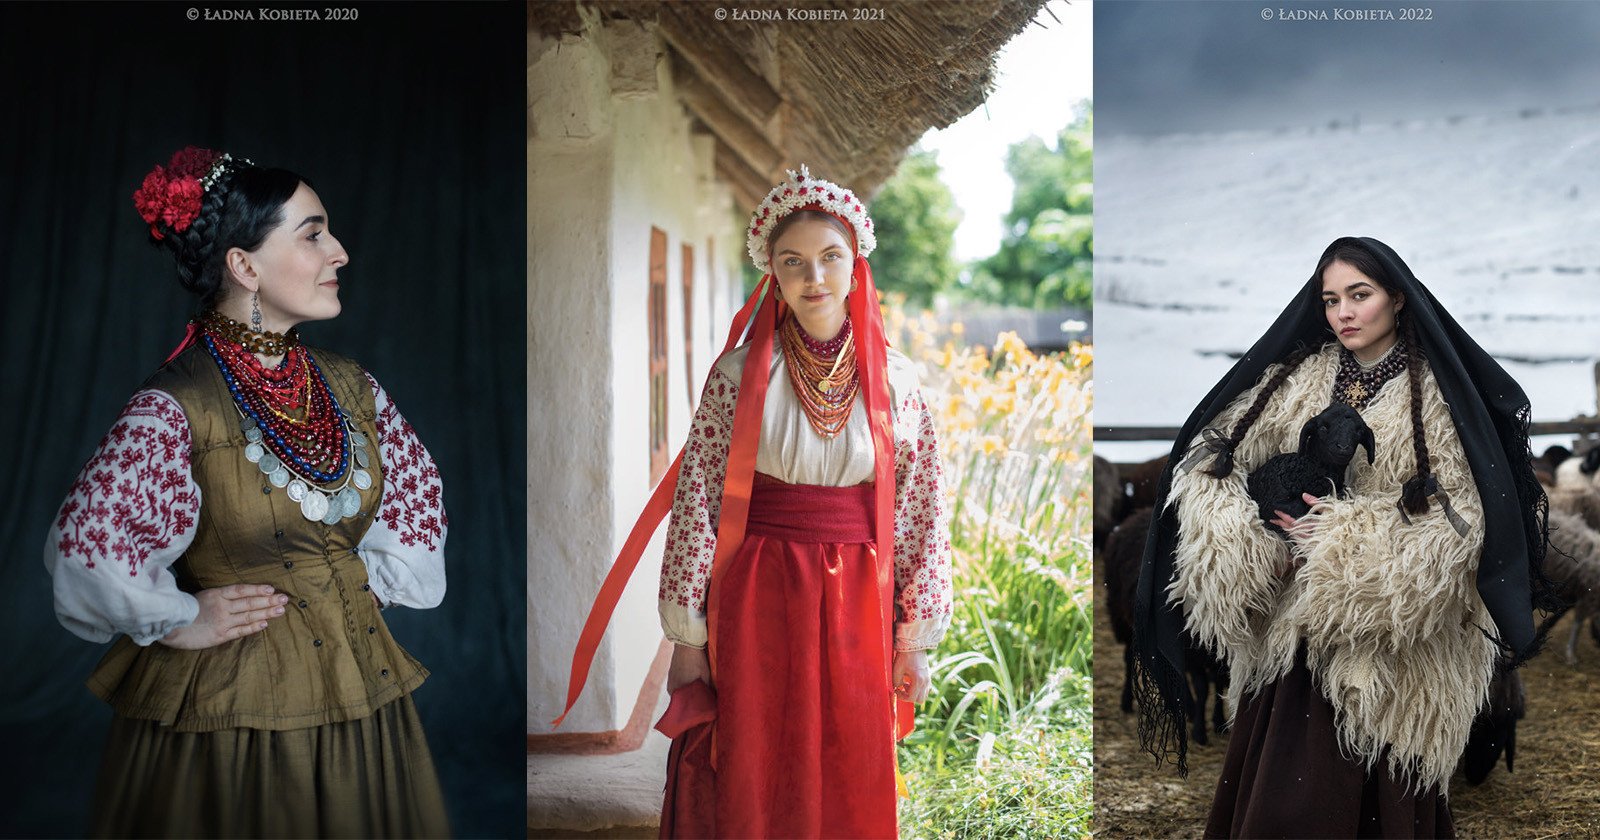 Ukrainian Photographers Ethnic Photos Represent Whats at Stake